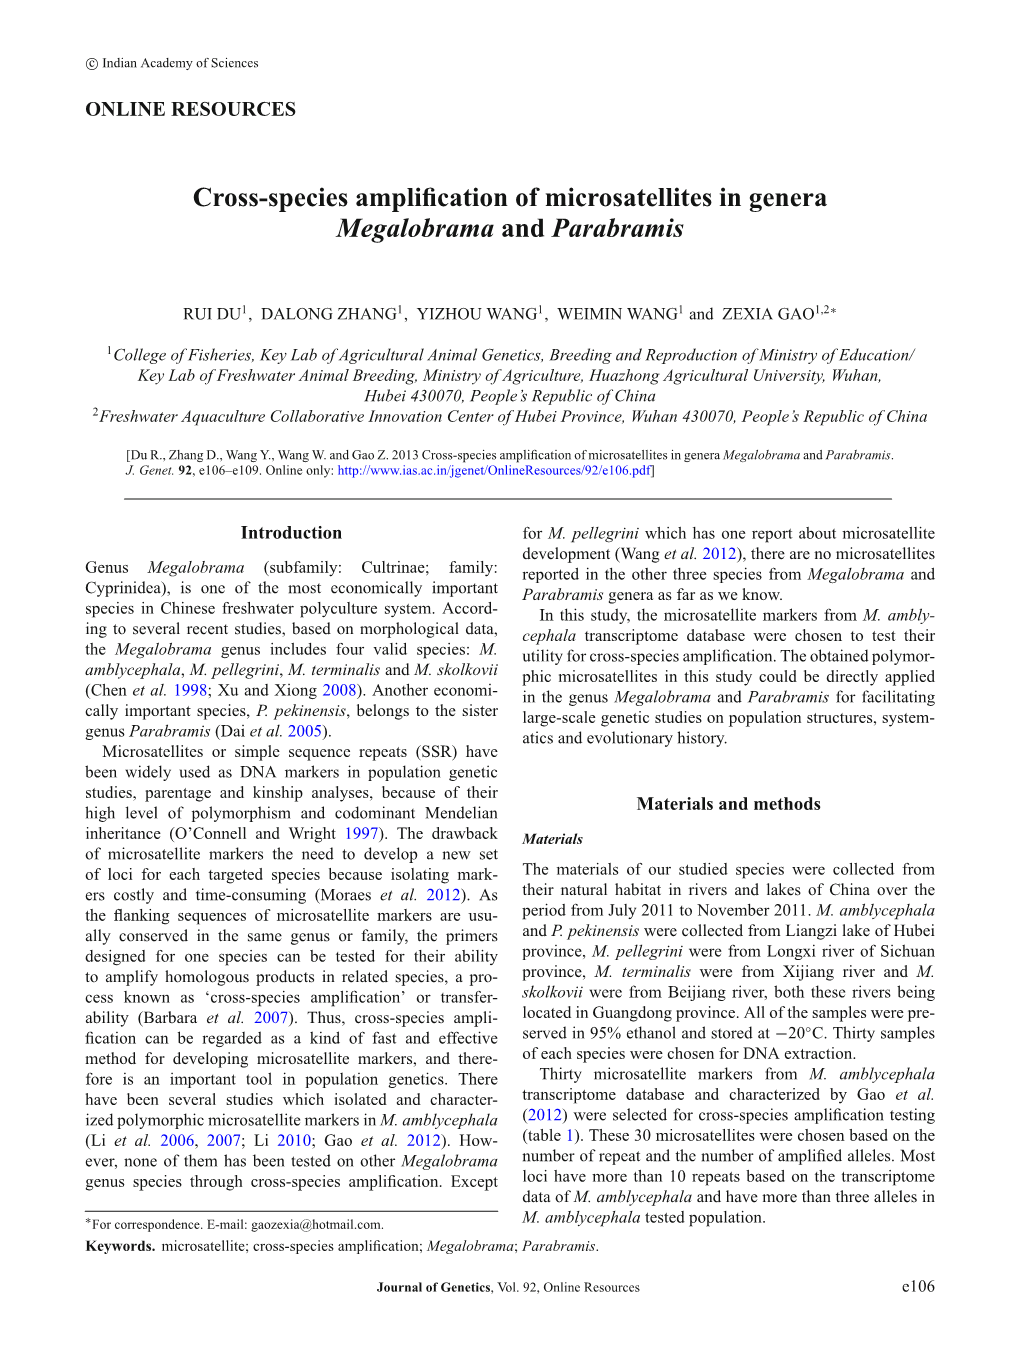 Cross-Species Amplification of Microsatellites in Genera